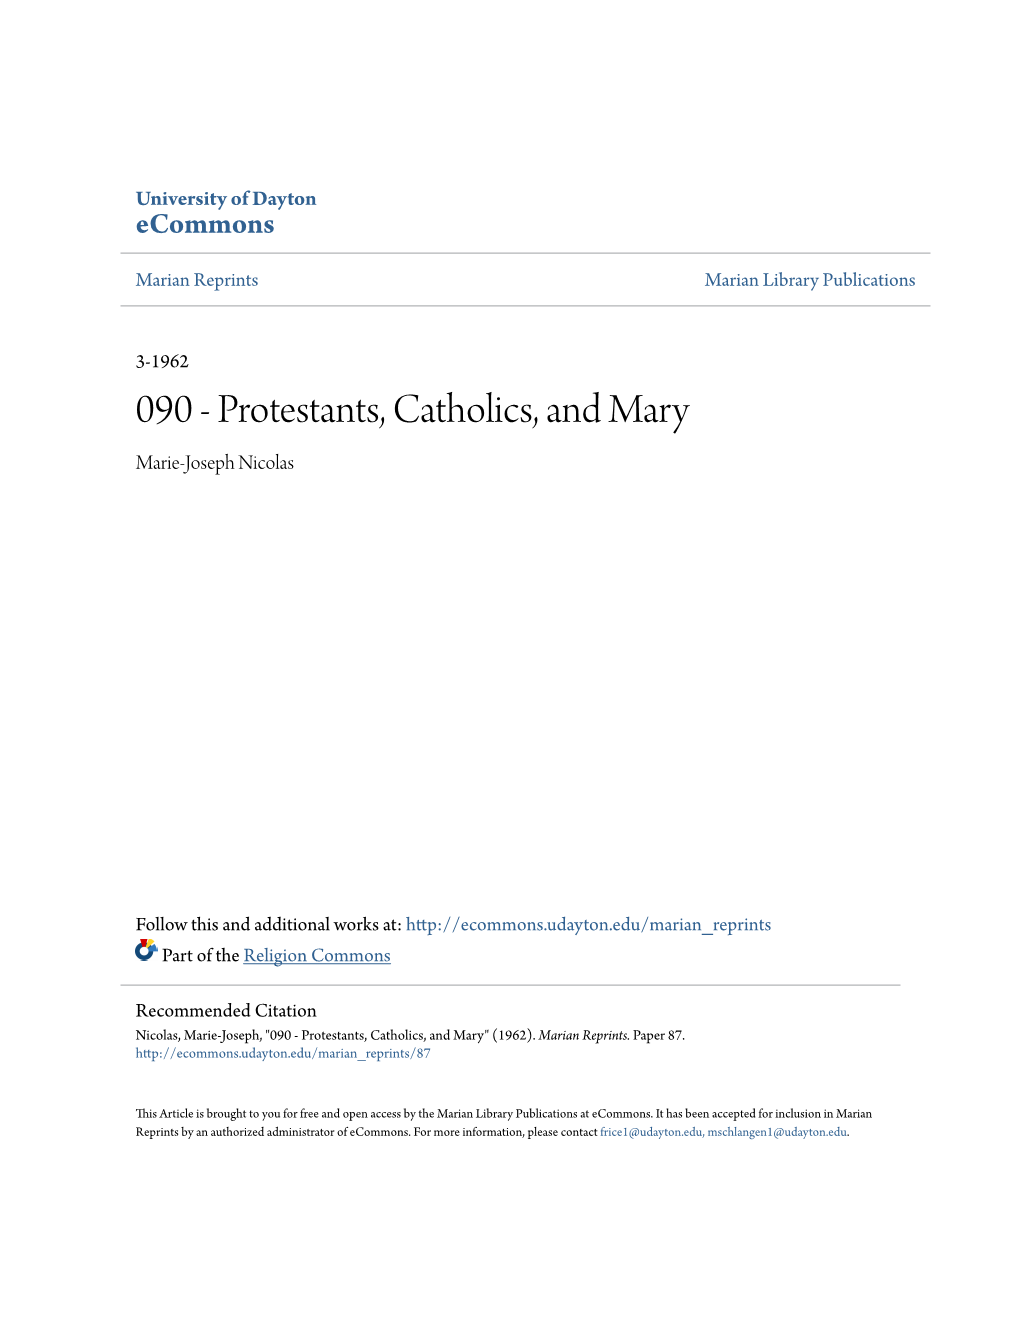 Protestants, Catholics, and Mary Marie-Joseph Nicolas